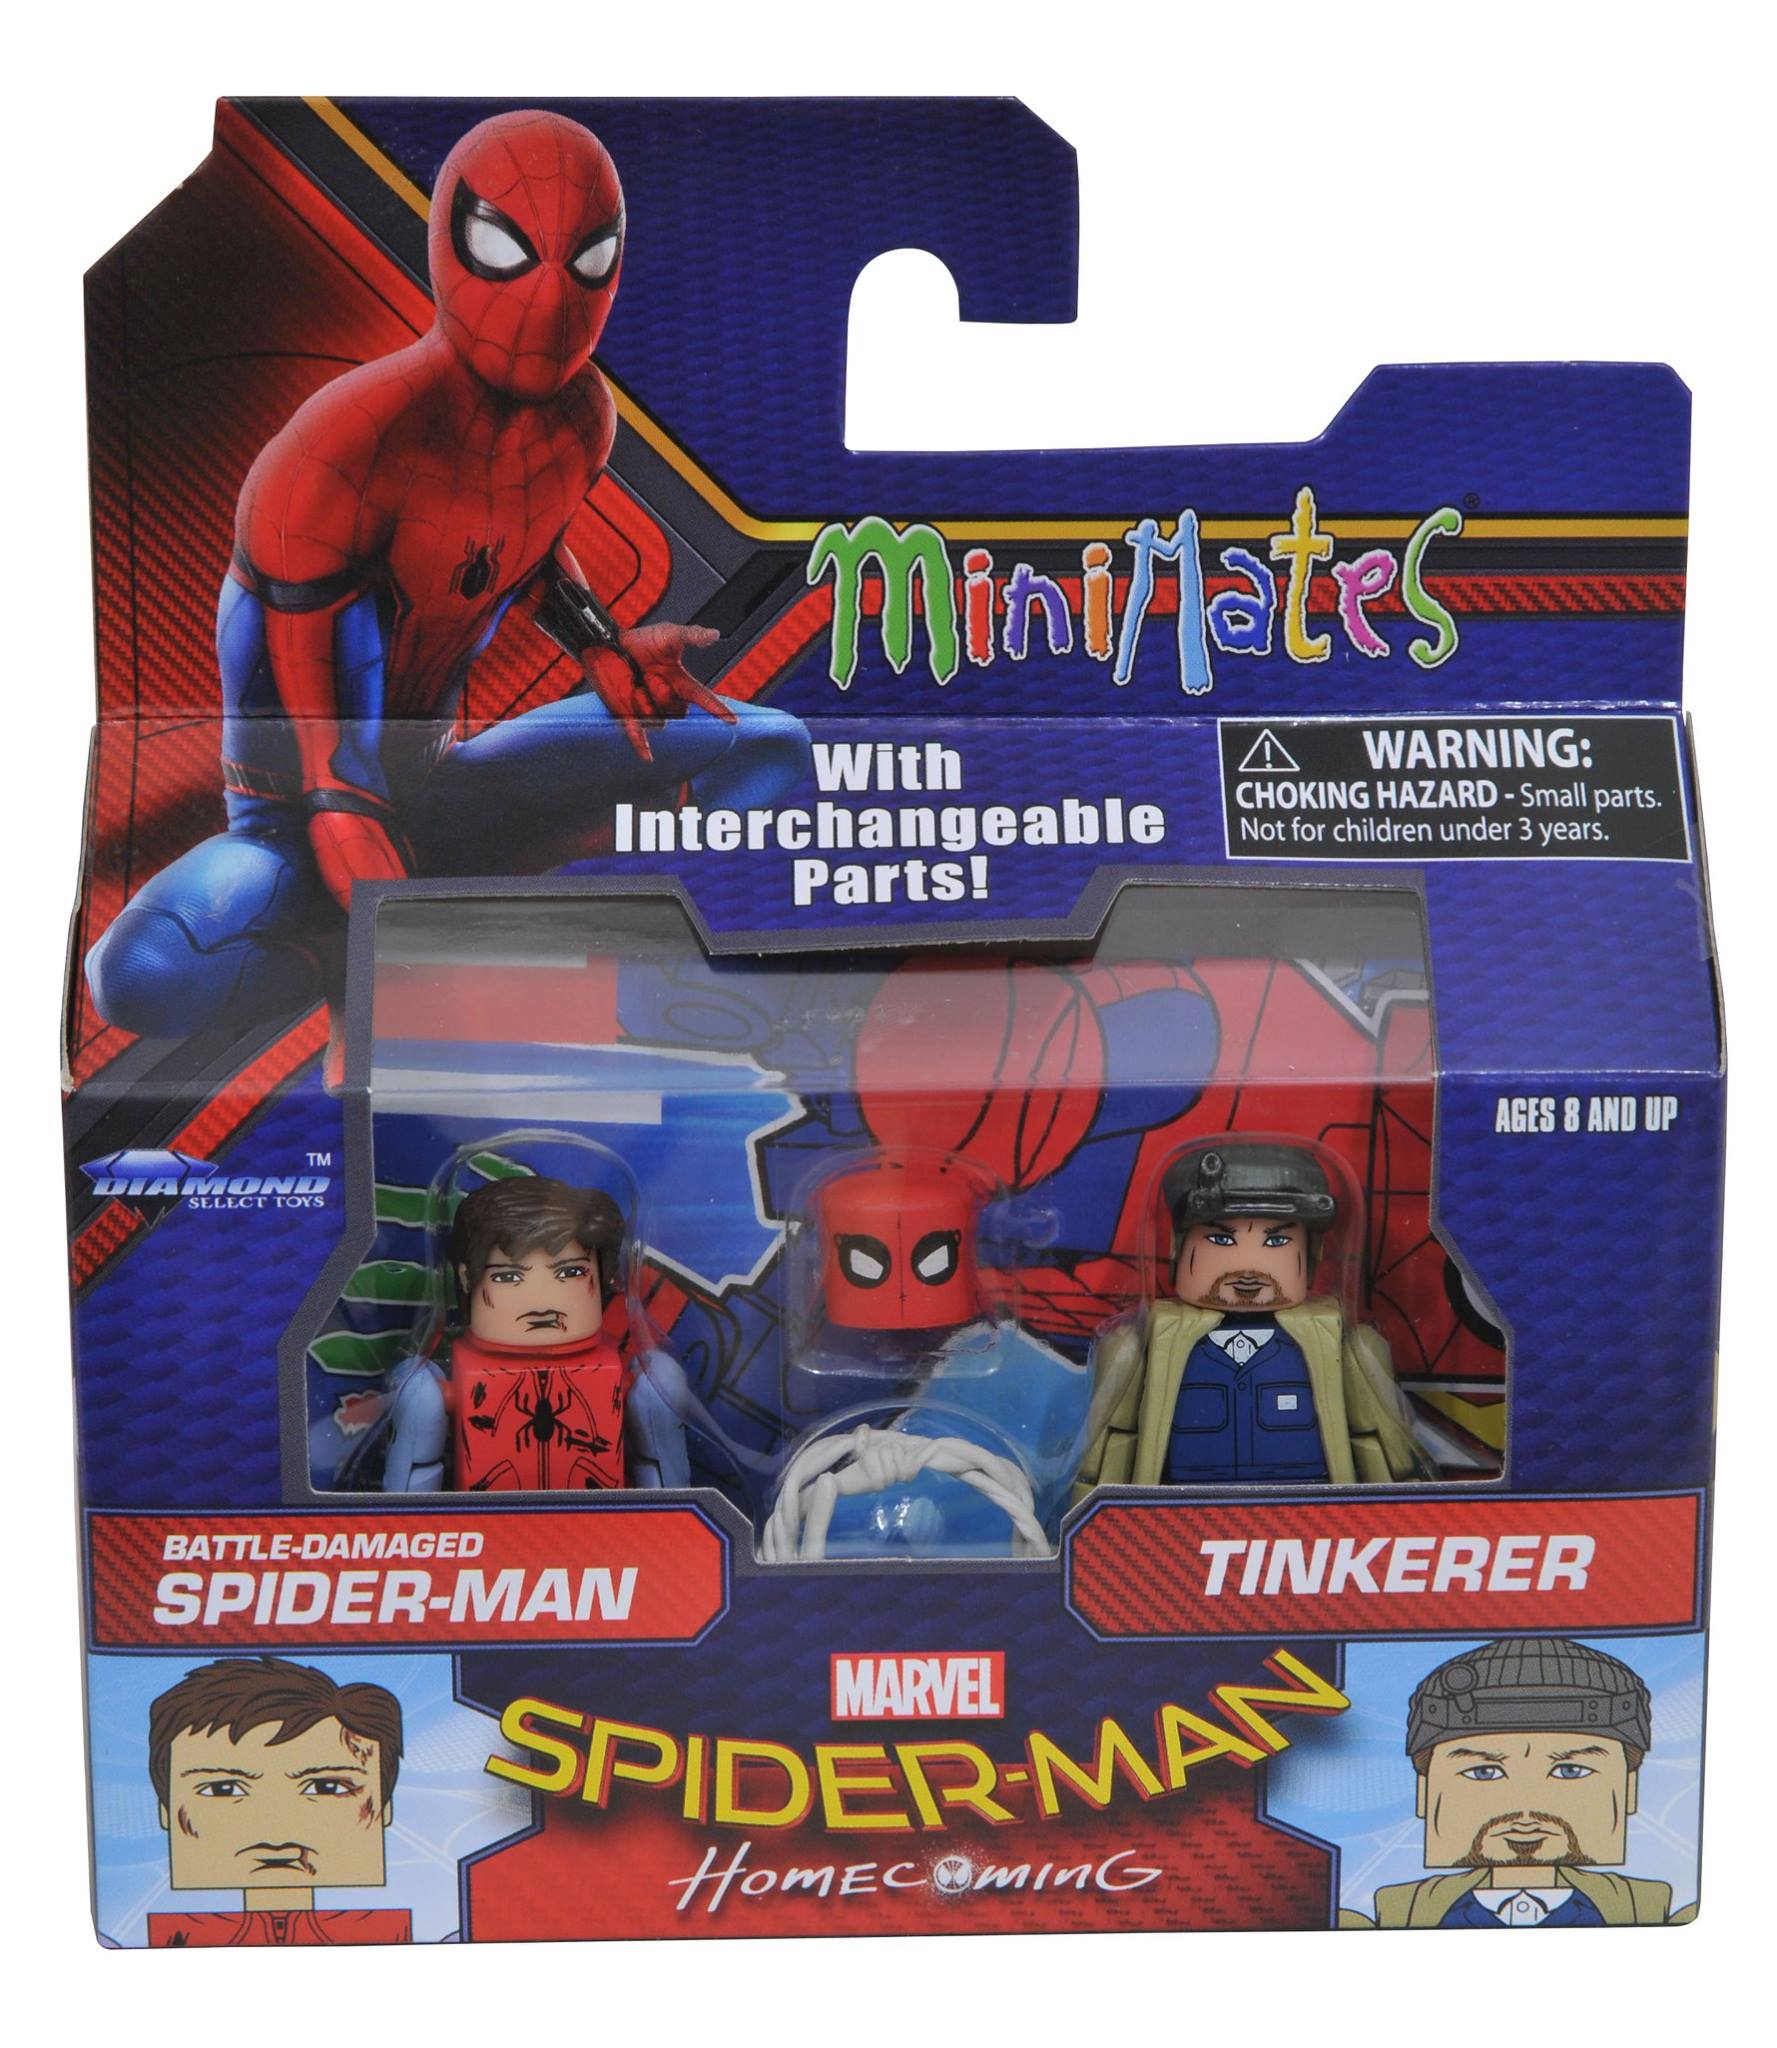 Spider-Man-Homecoming-Minimates-Packaged-005.jpg